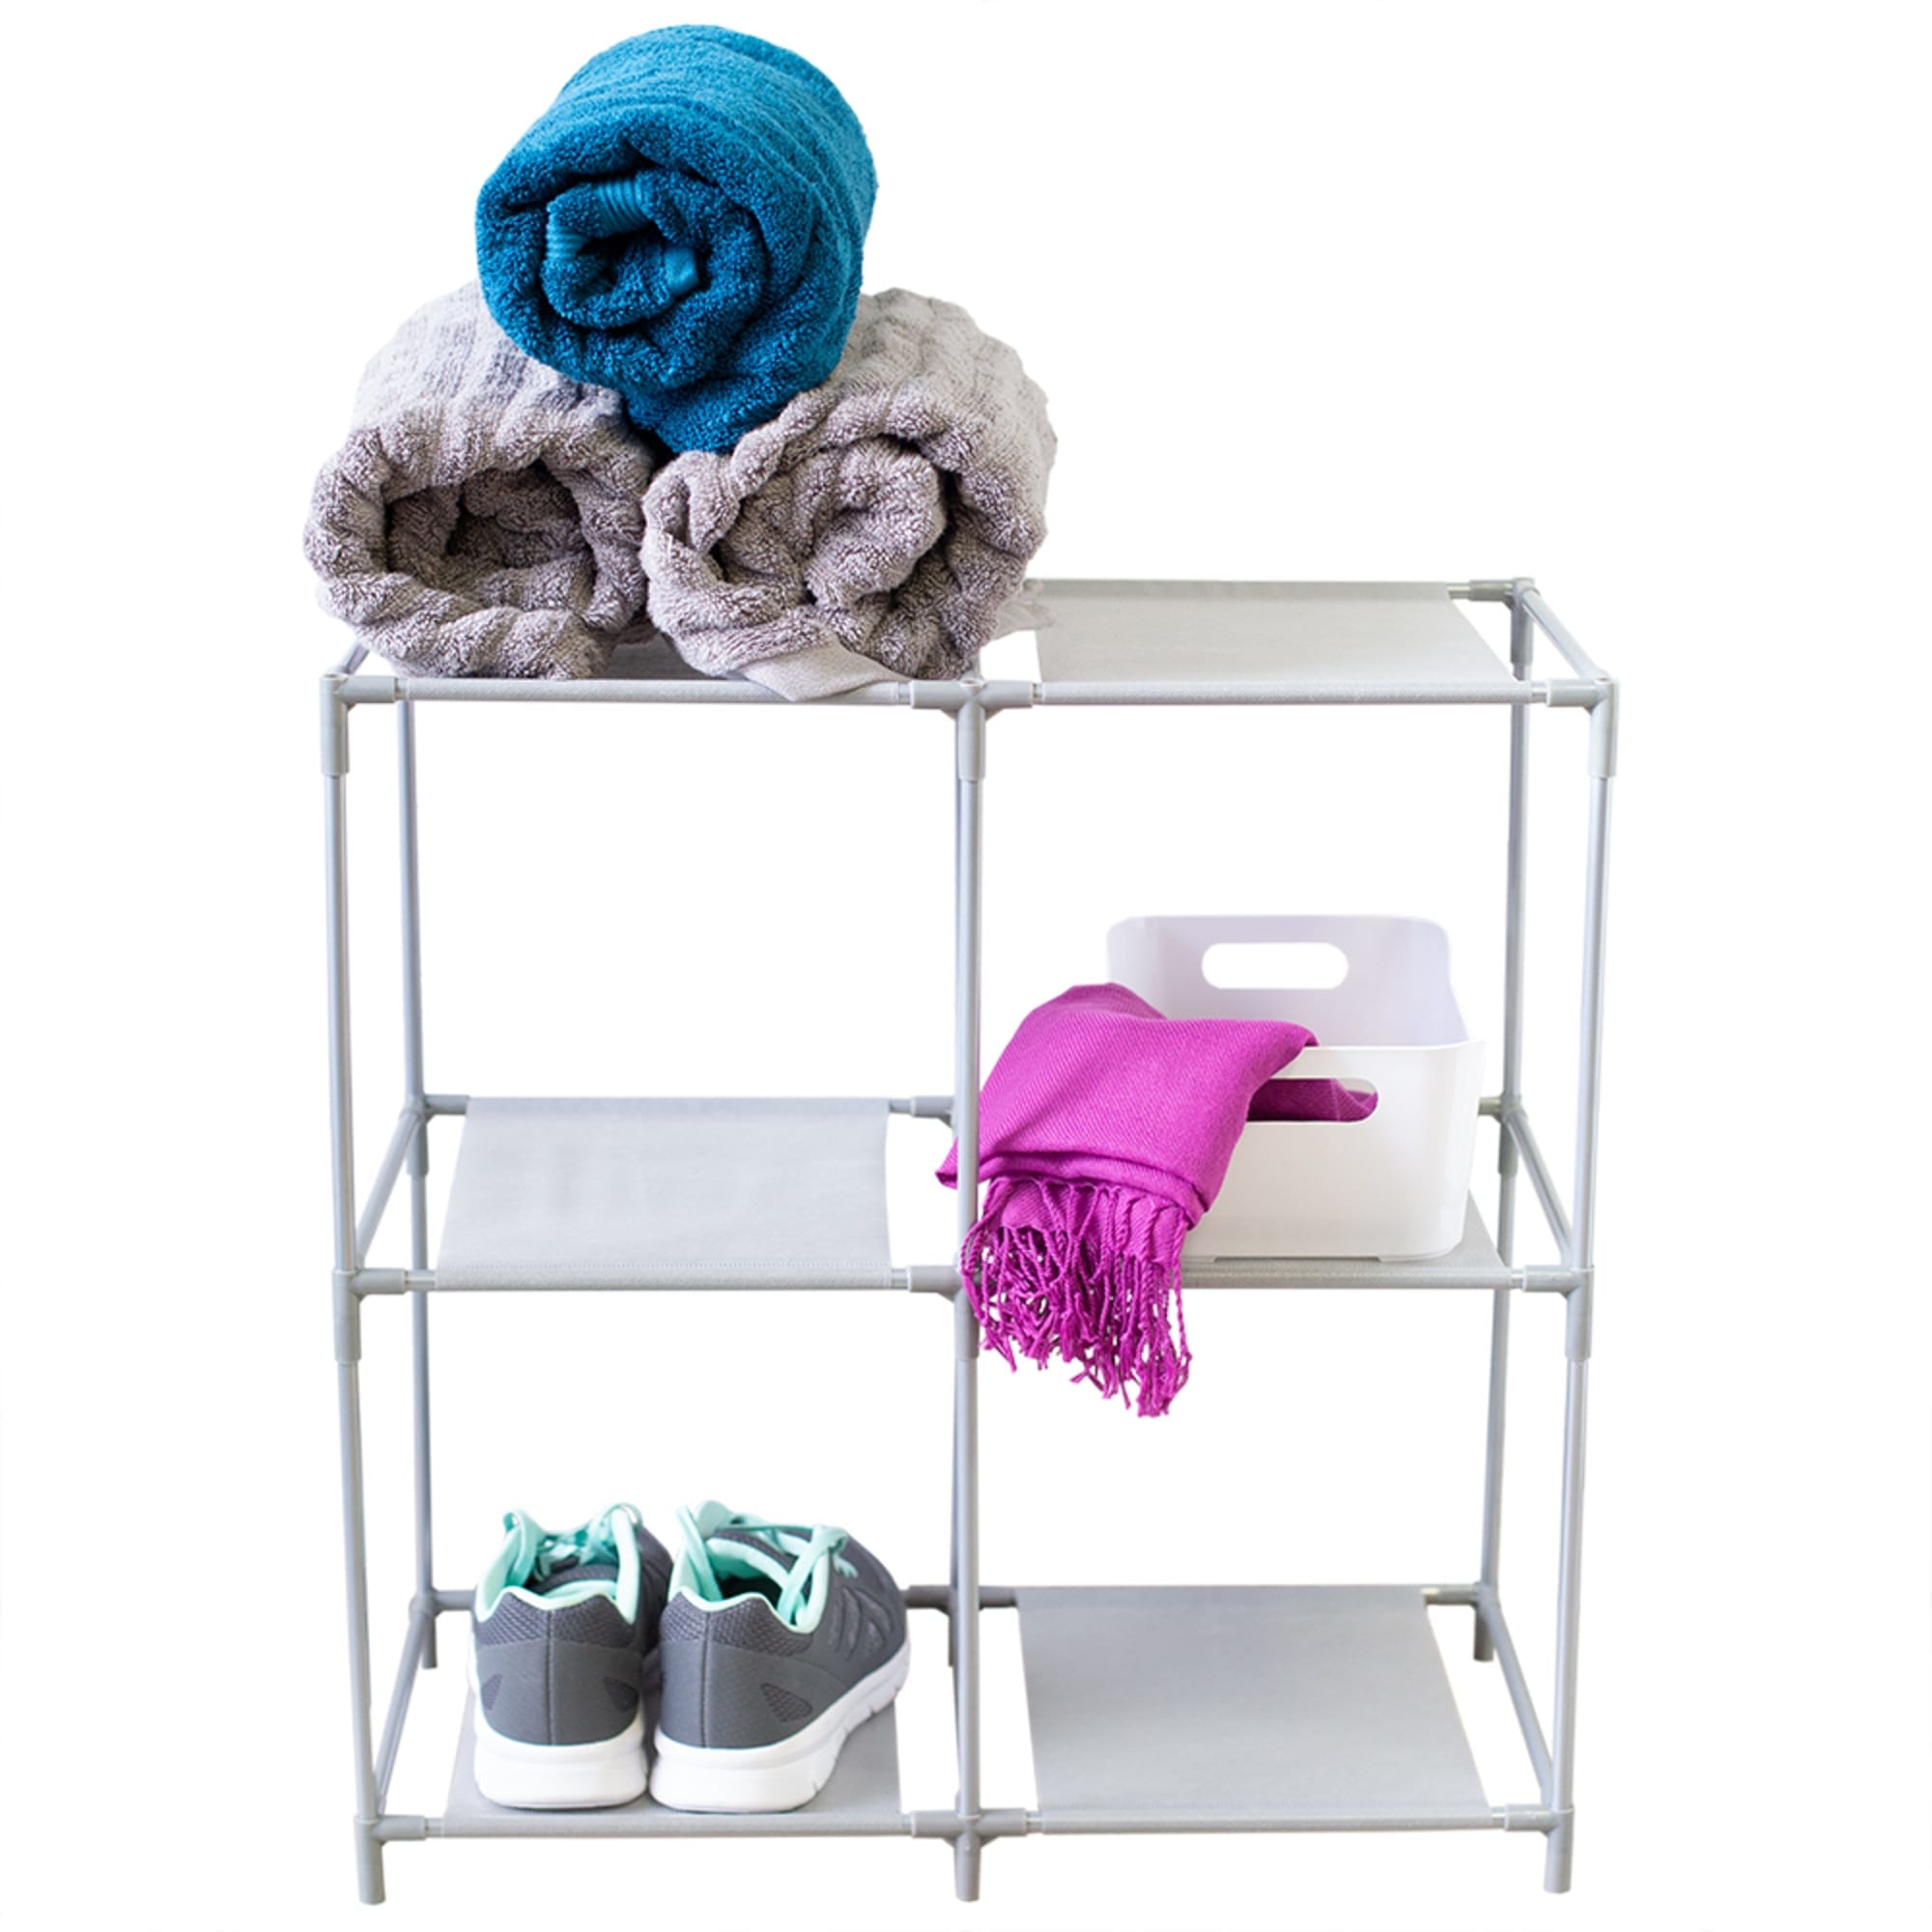 Home Basics Multi-Purpose Free-Standing 4 Cubed Organizing Storage Shelf, Grey $6.00 EACH, CASE PACK OF 12